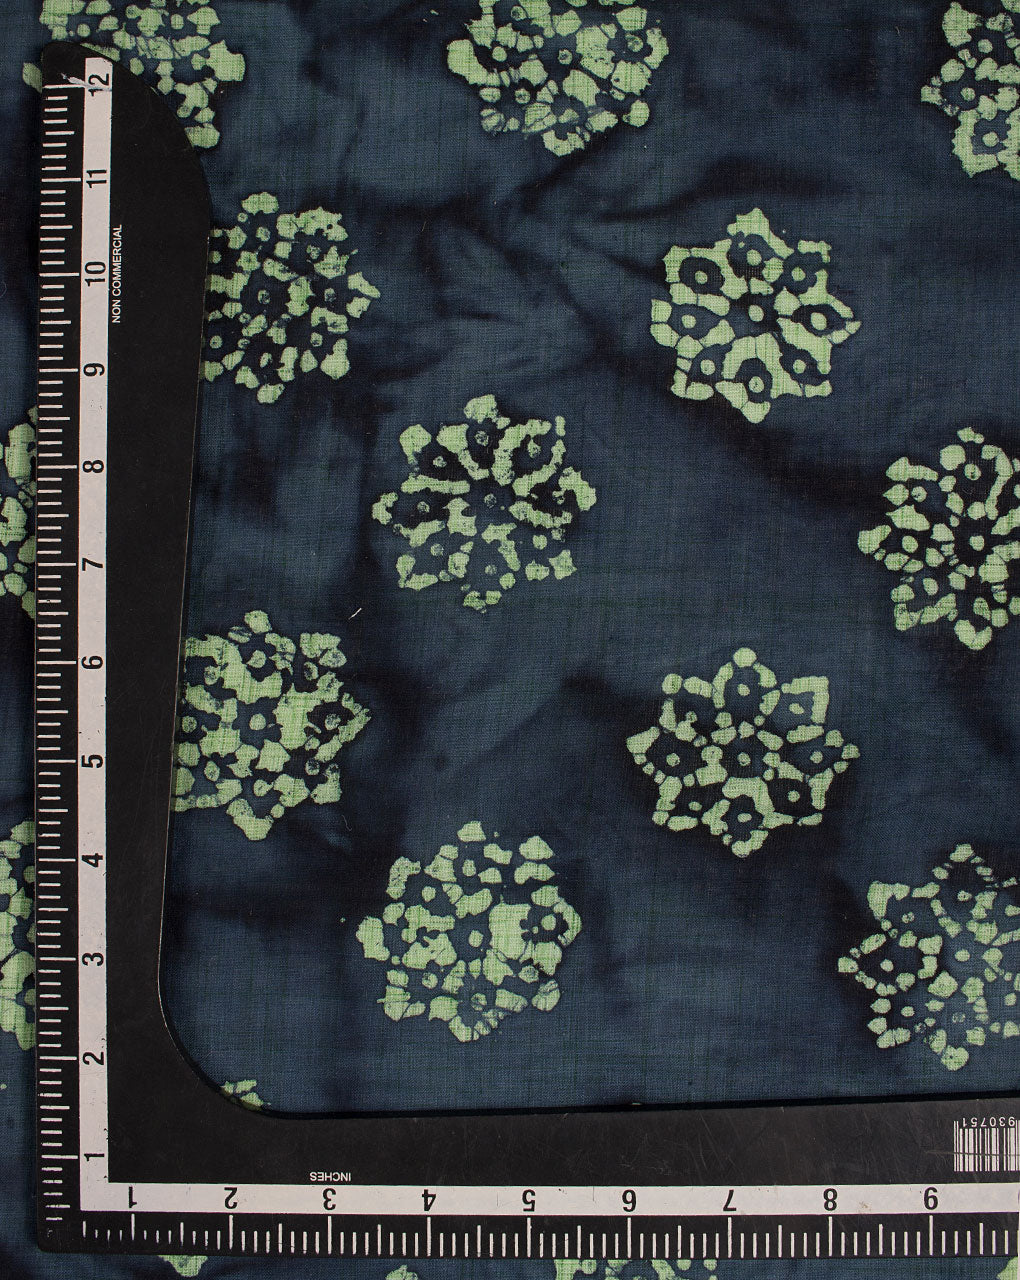 Wax Batik Hand Block Loom Textured Cotton Fabric